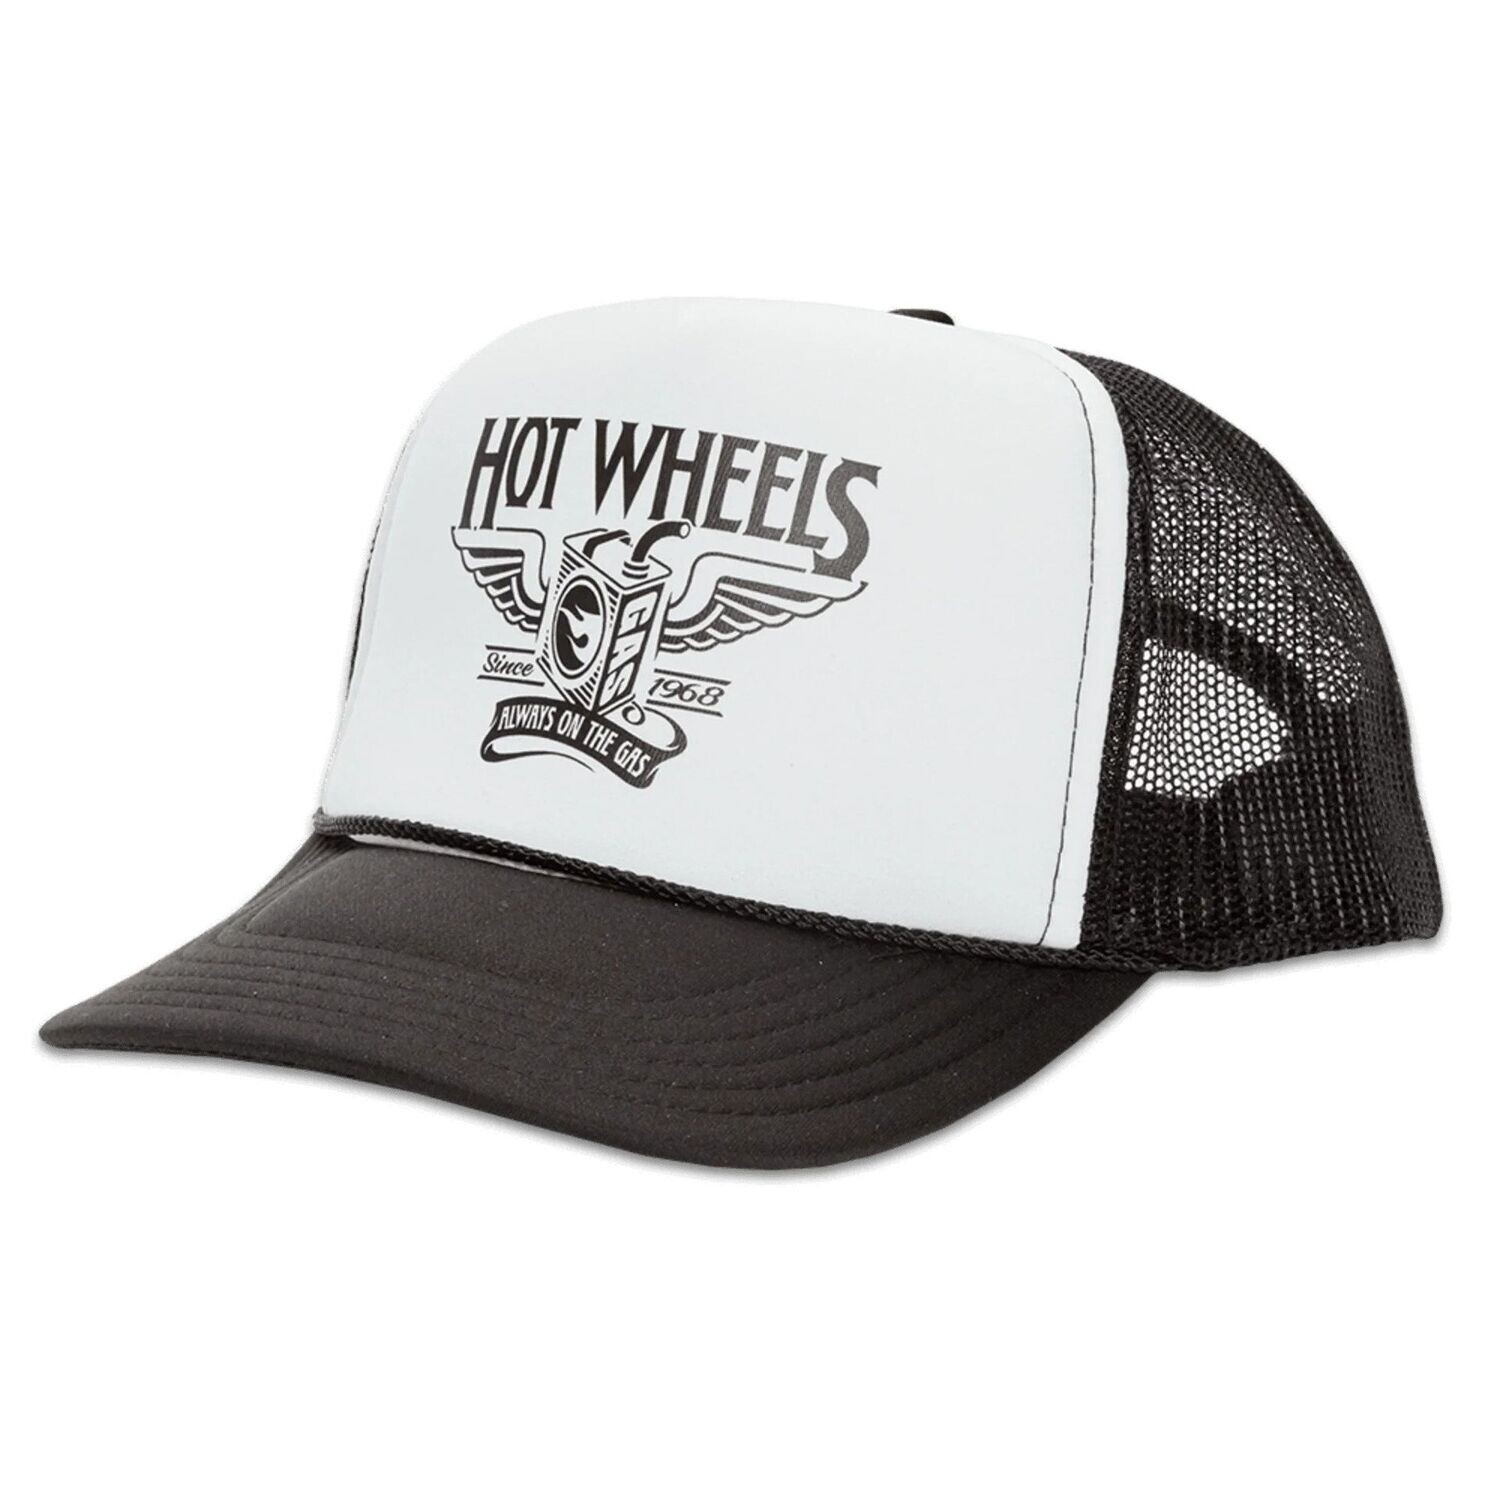 Hot Wheels Collectors “Gas” Hat